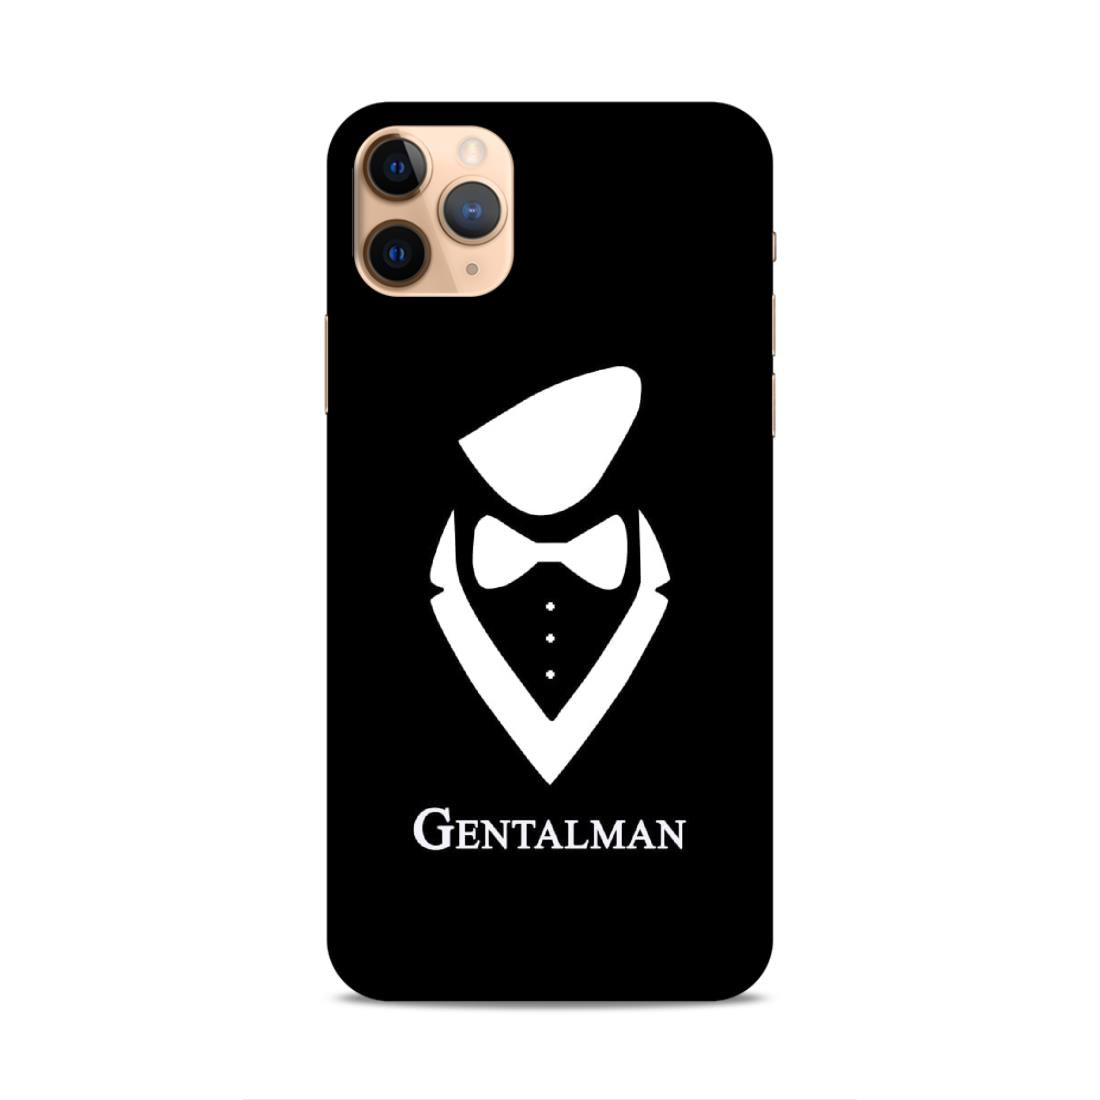 Gentalman Hard Back Case For Apple iPhone 11 Pro